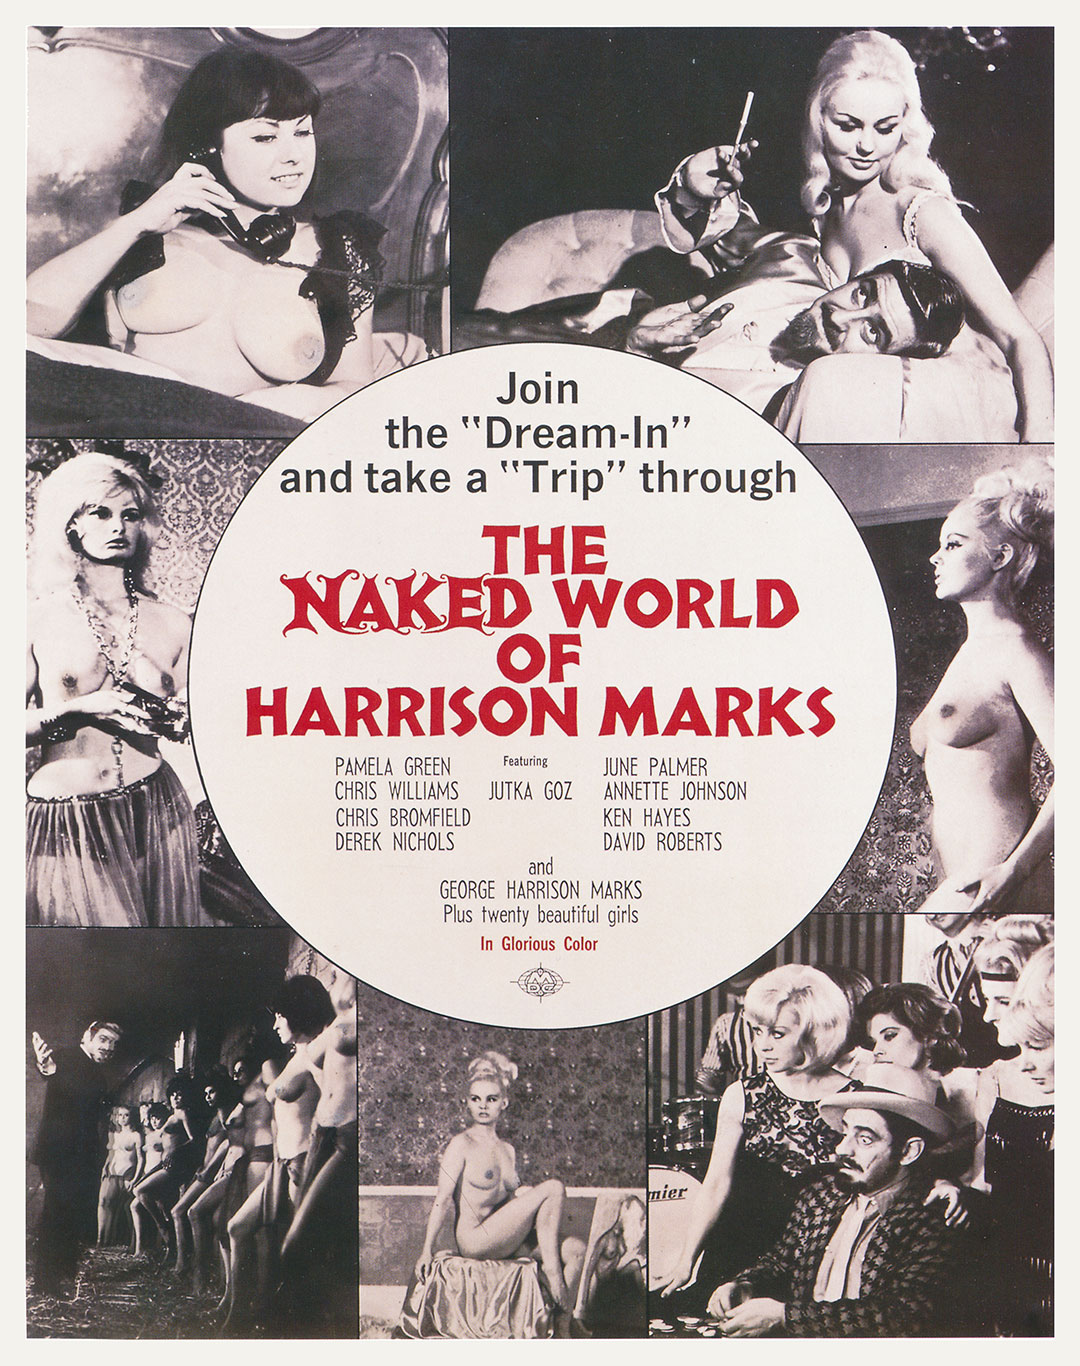 The Naked world of Harrison Marks